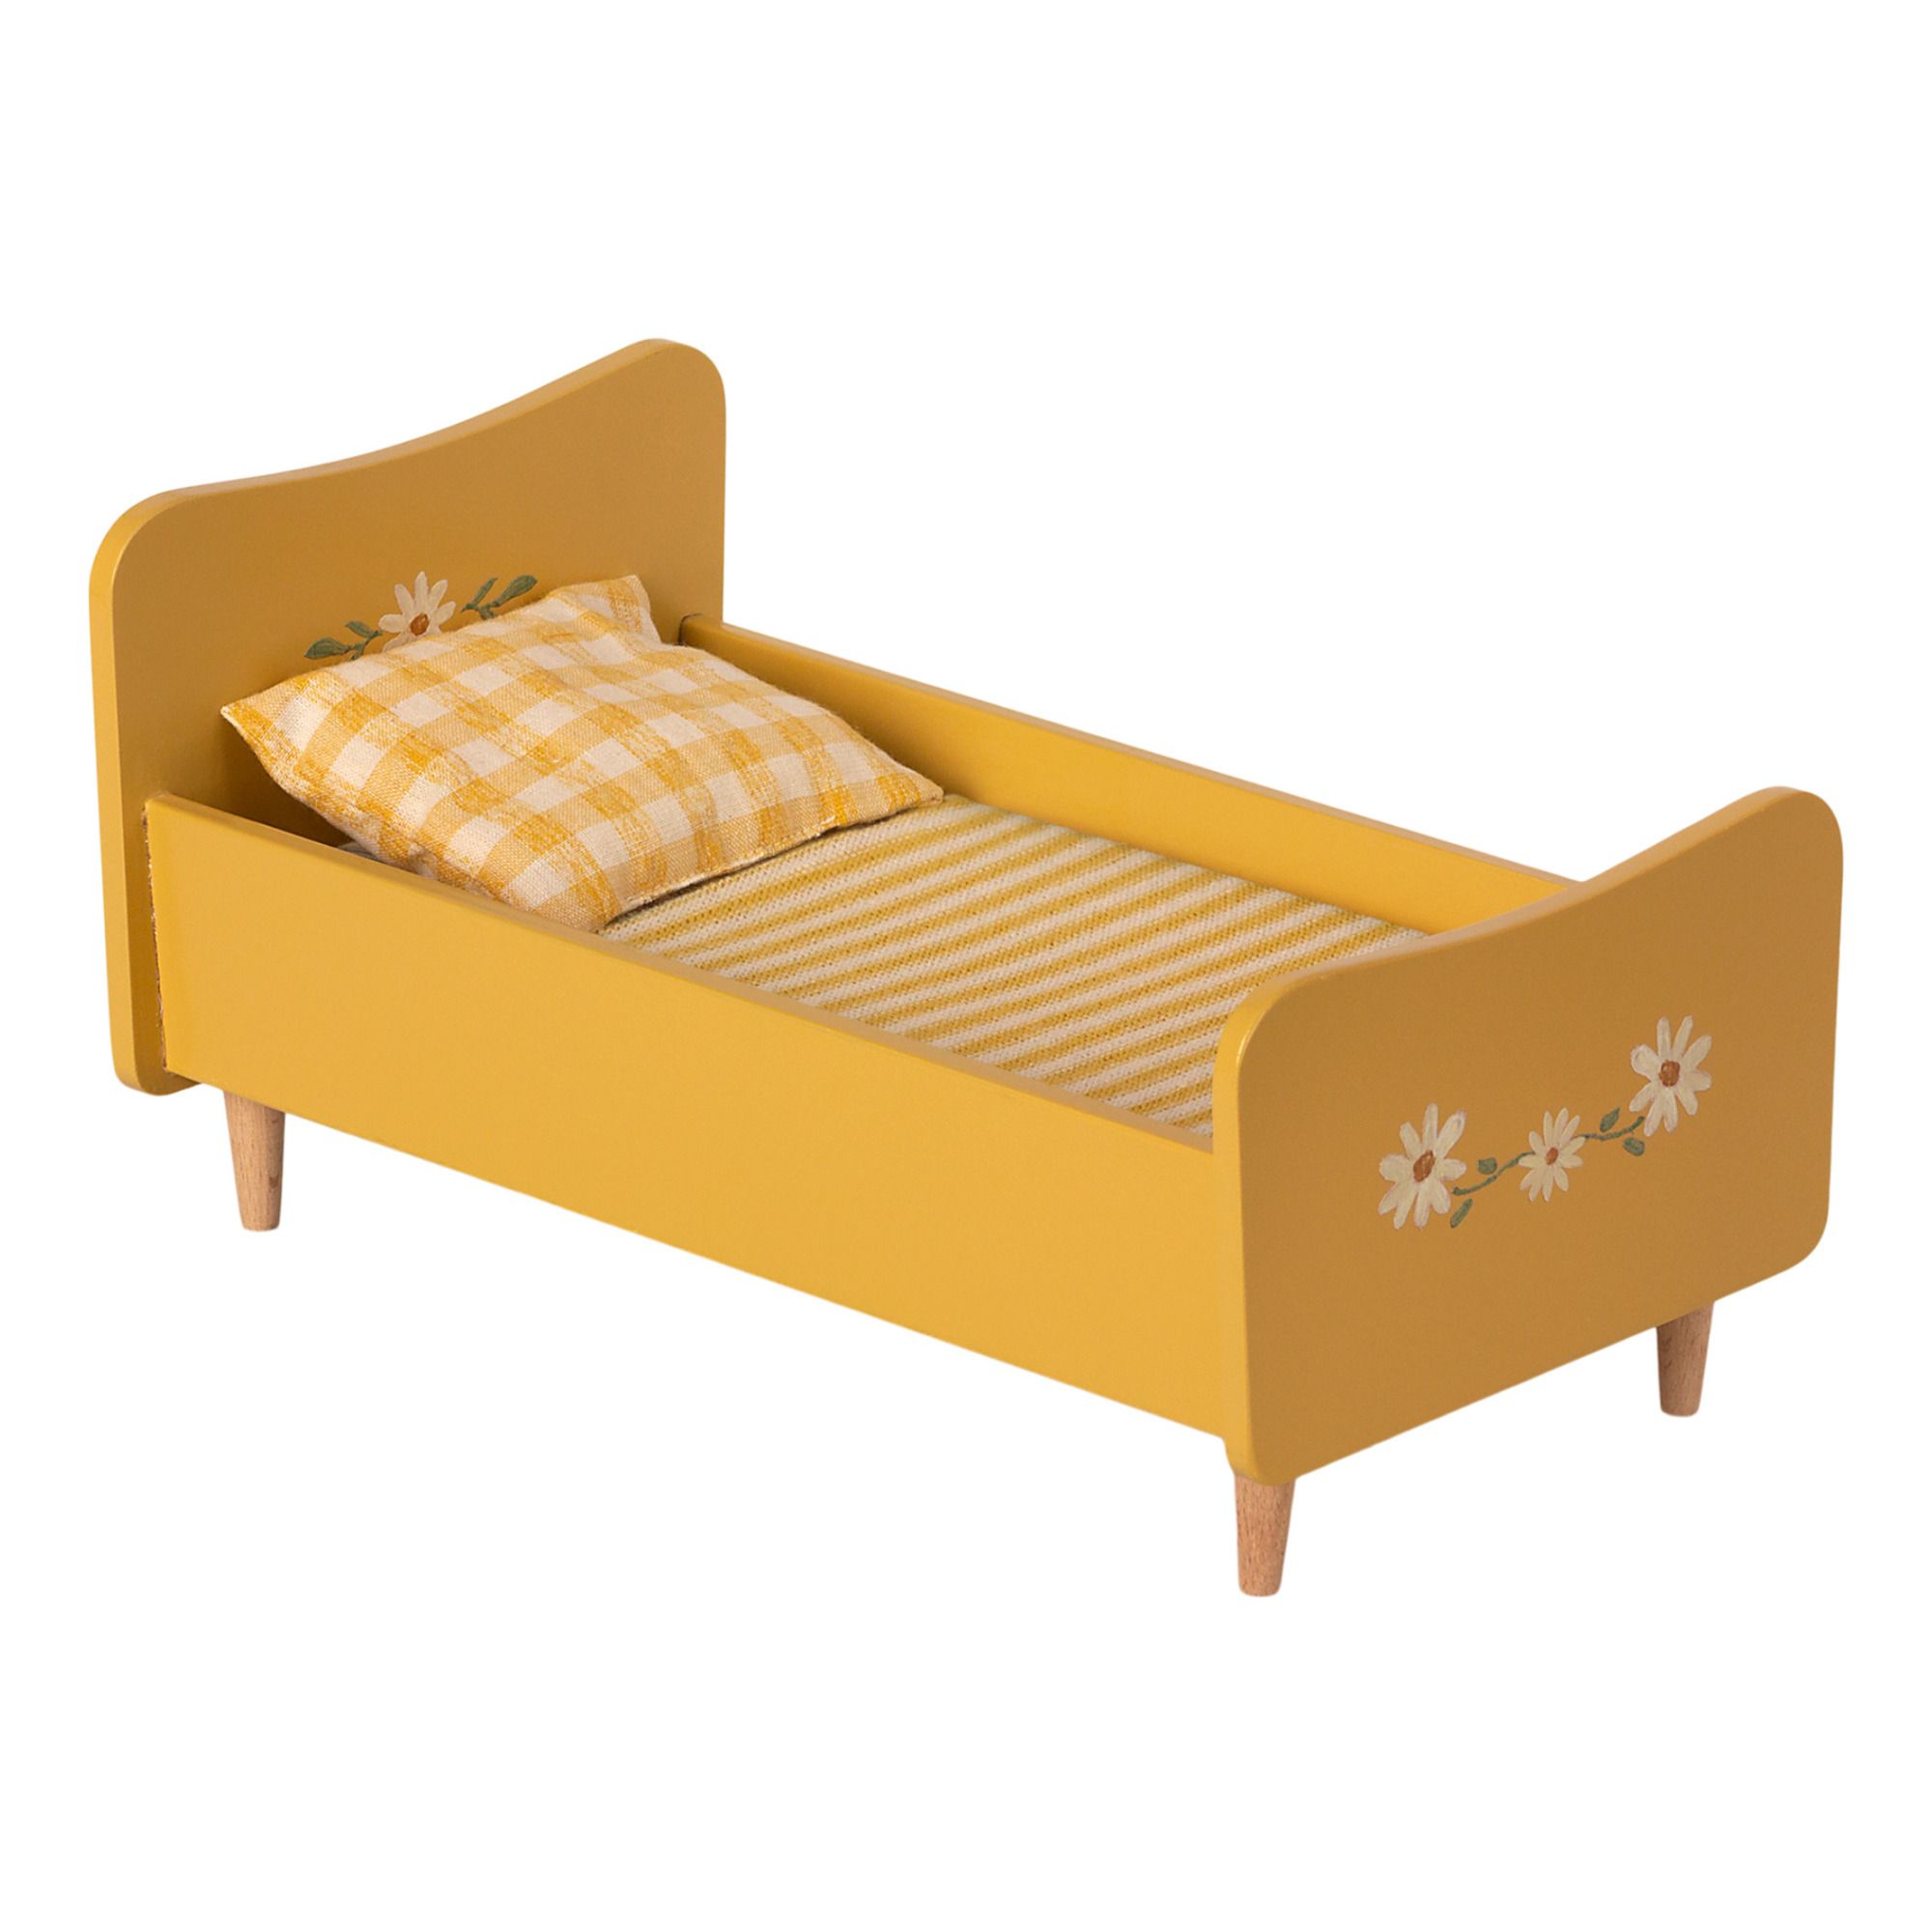 Maileg - Mini lit en bois - Jaune